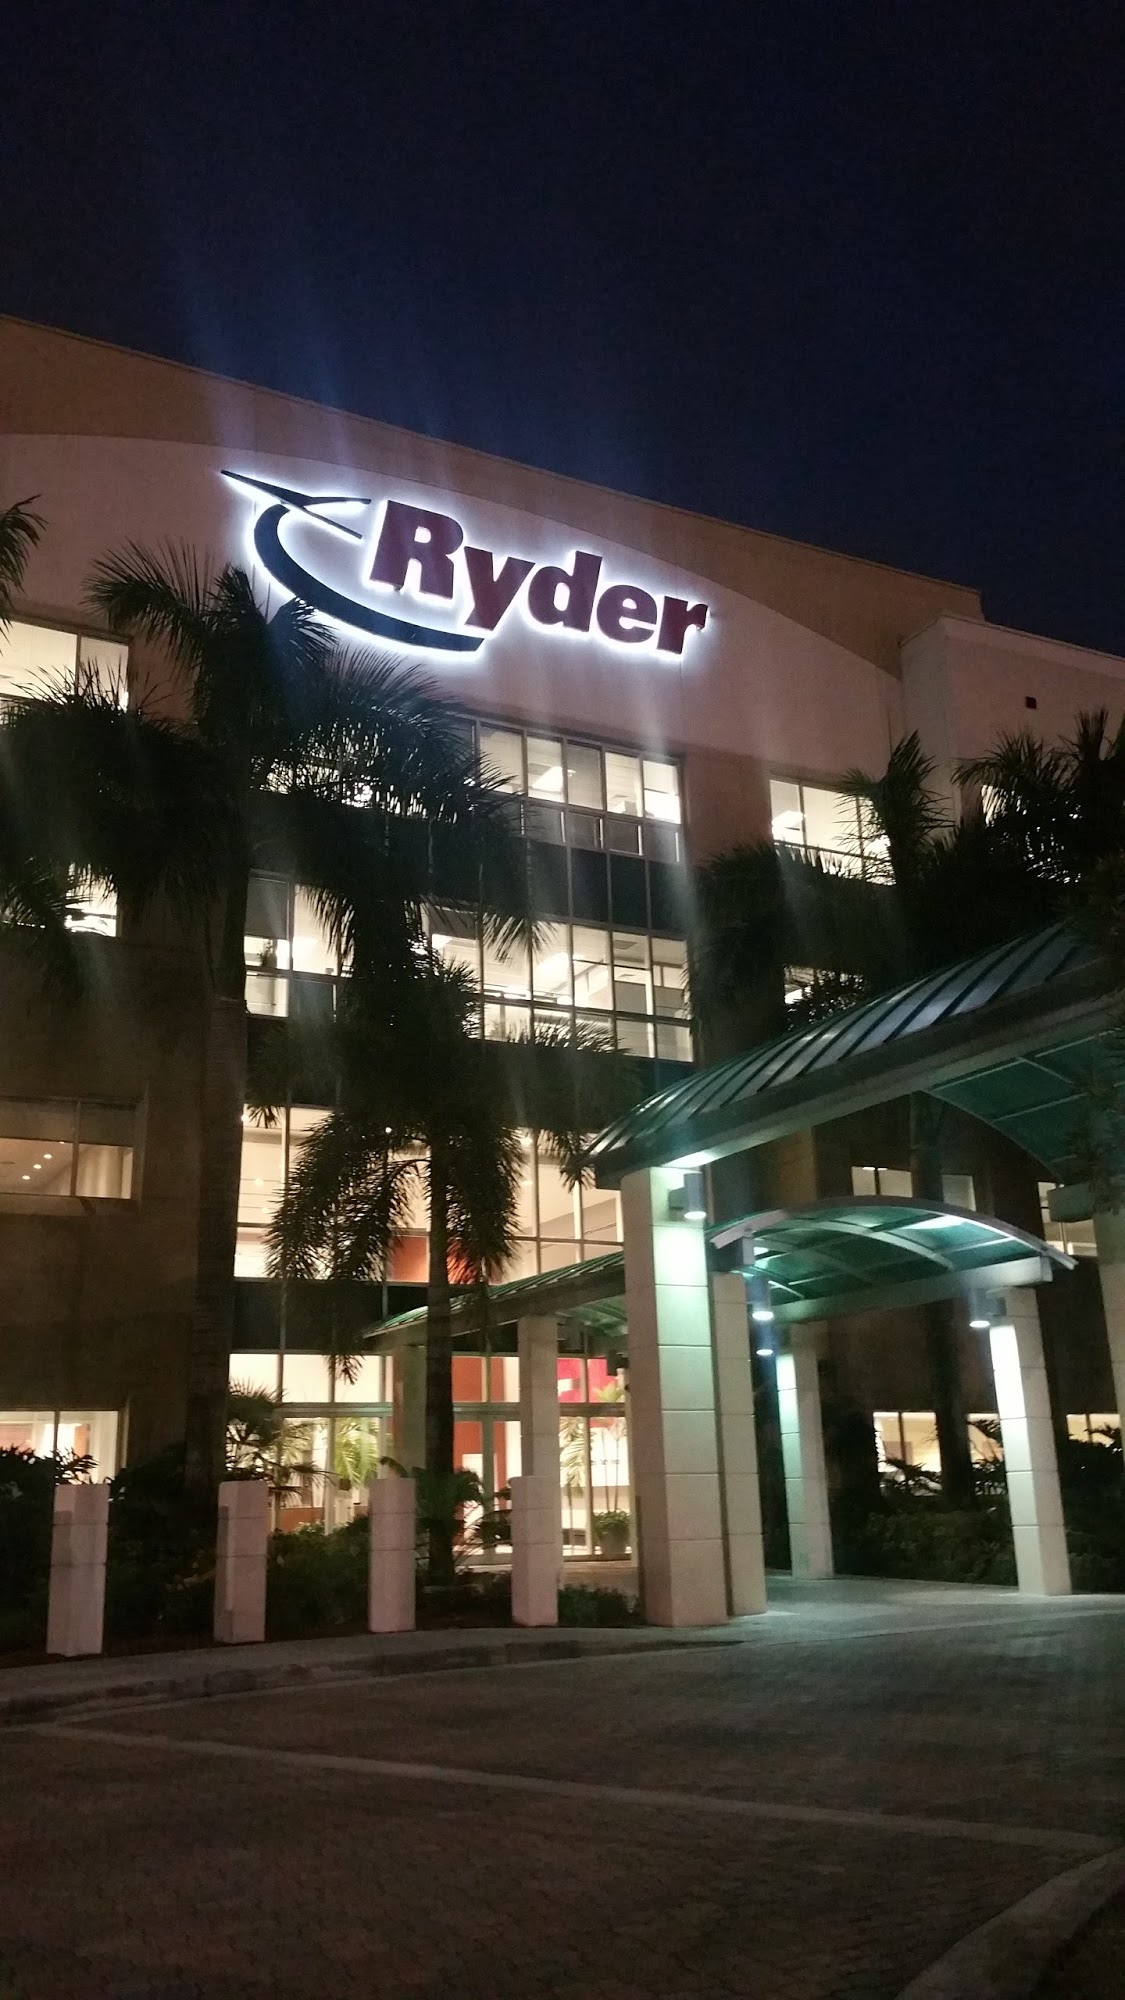 Ryder Credit Union